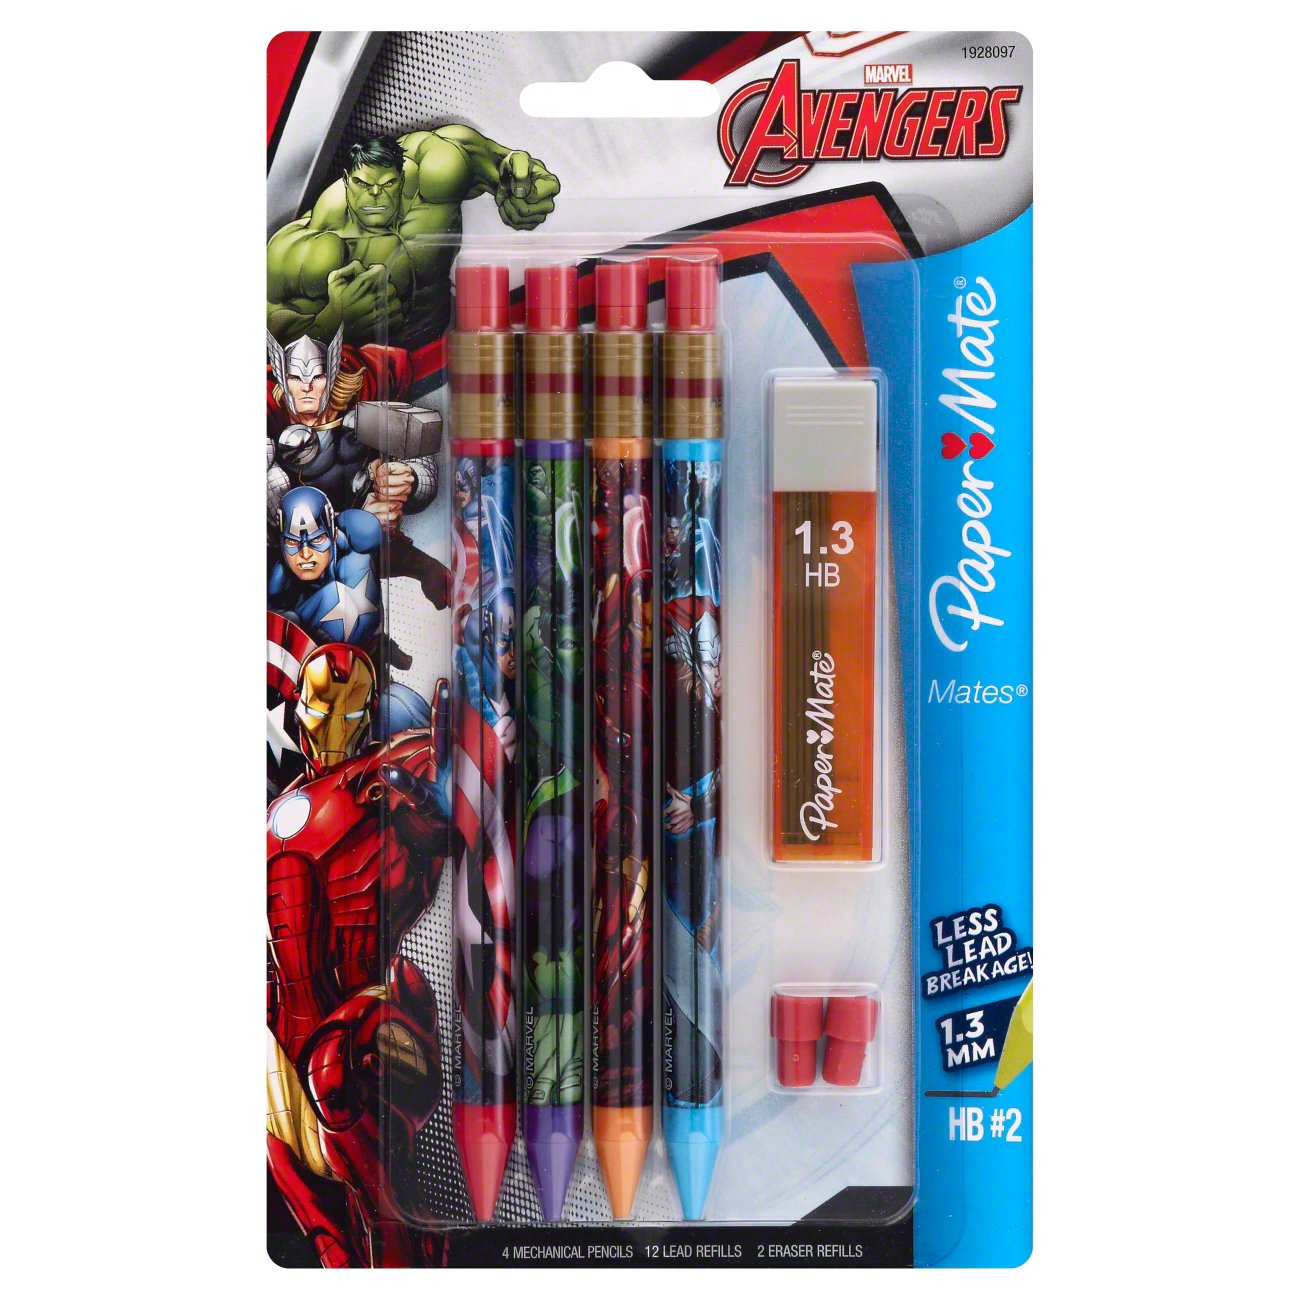 Avengers Mechanical Pencils